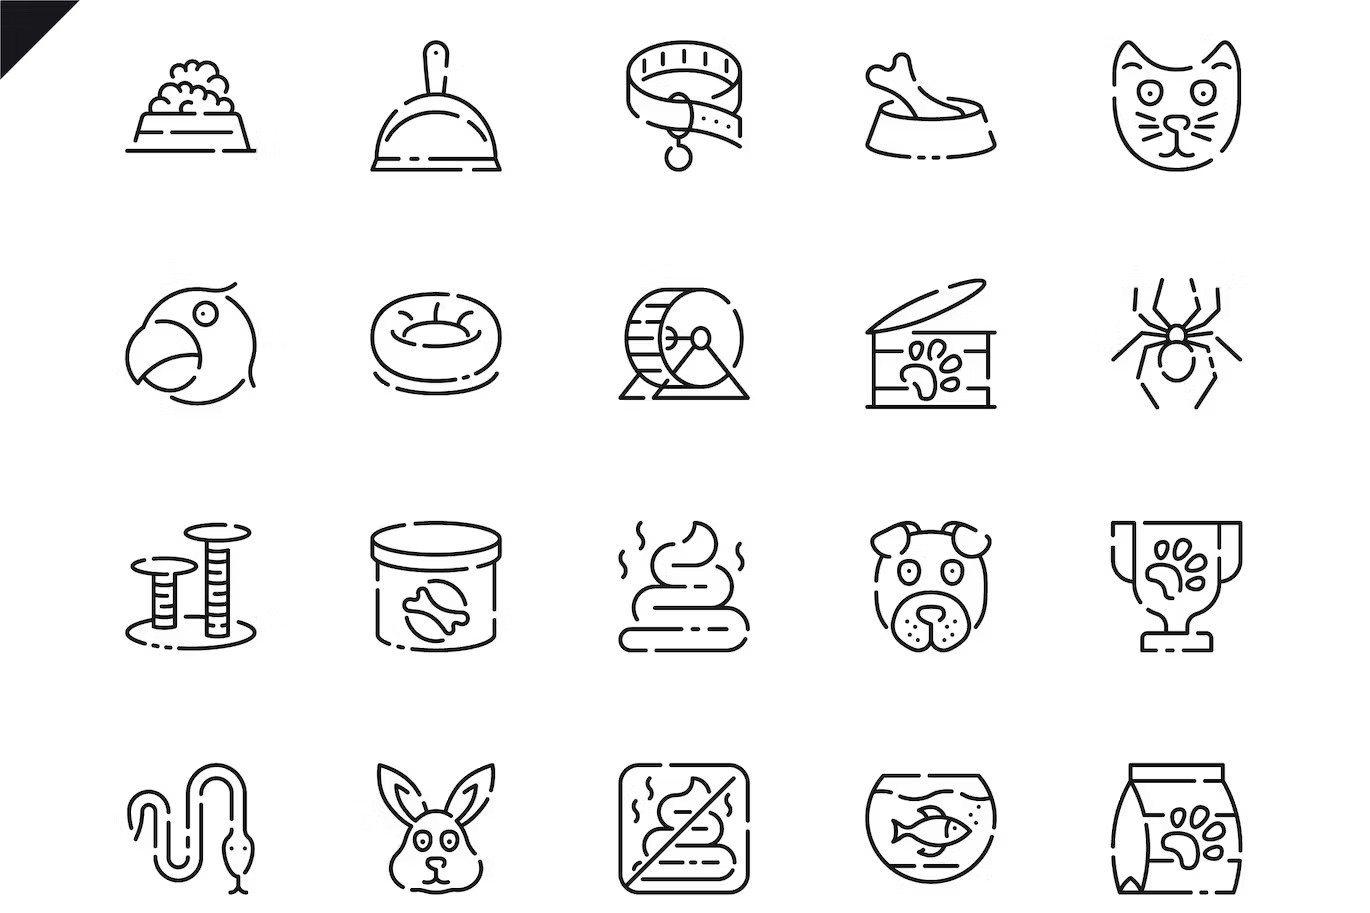 Animals line style icons